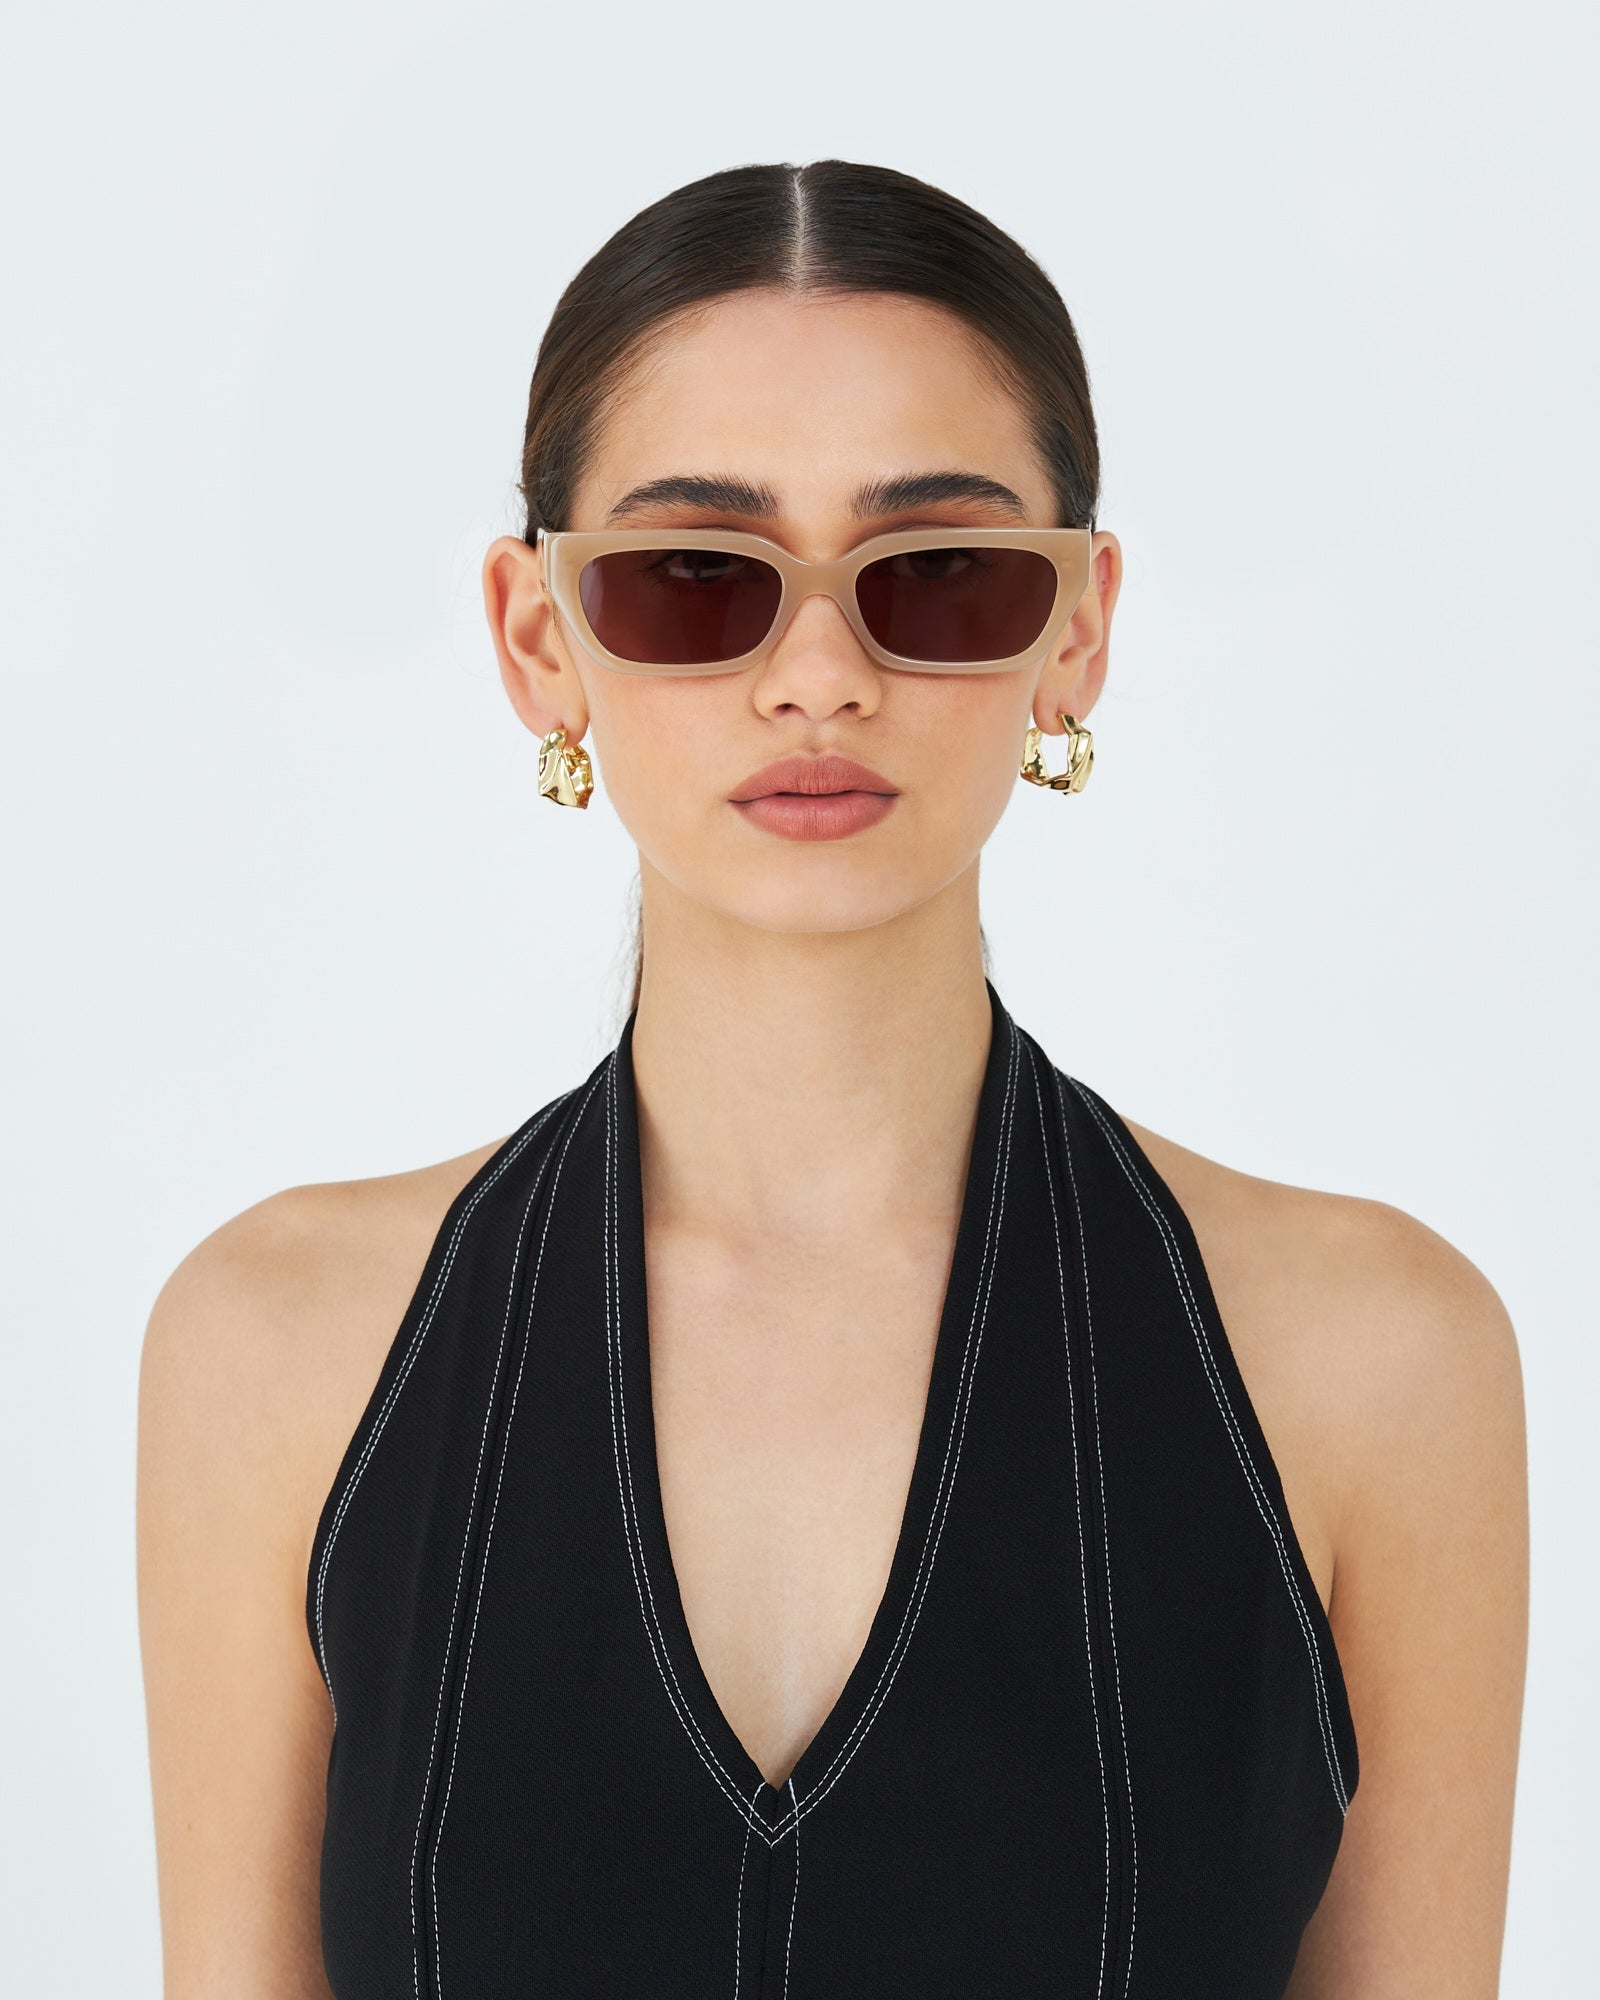 The Gigi, Beige - Wide Frame Sunnies, Women's Sunglasses & Eyewear by Luv Lou